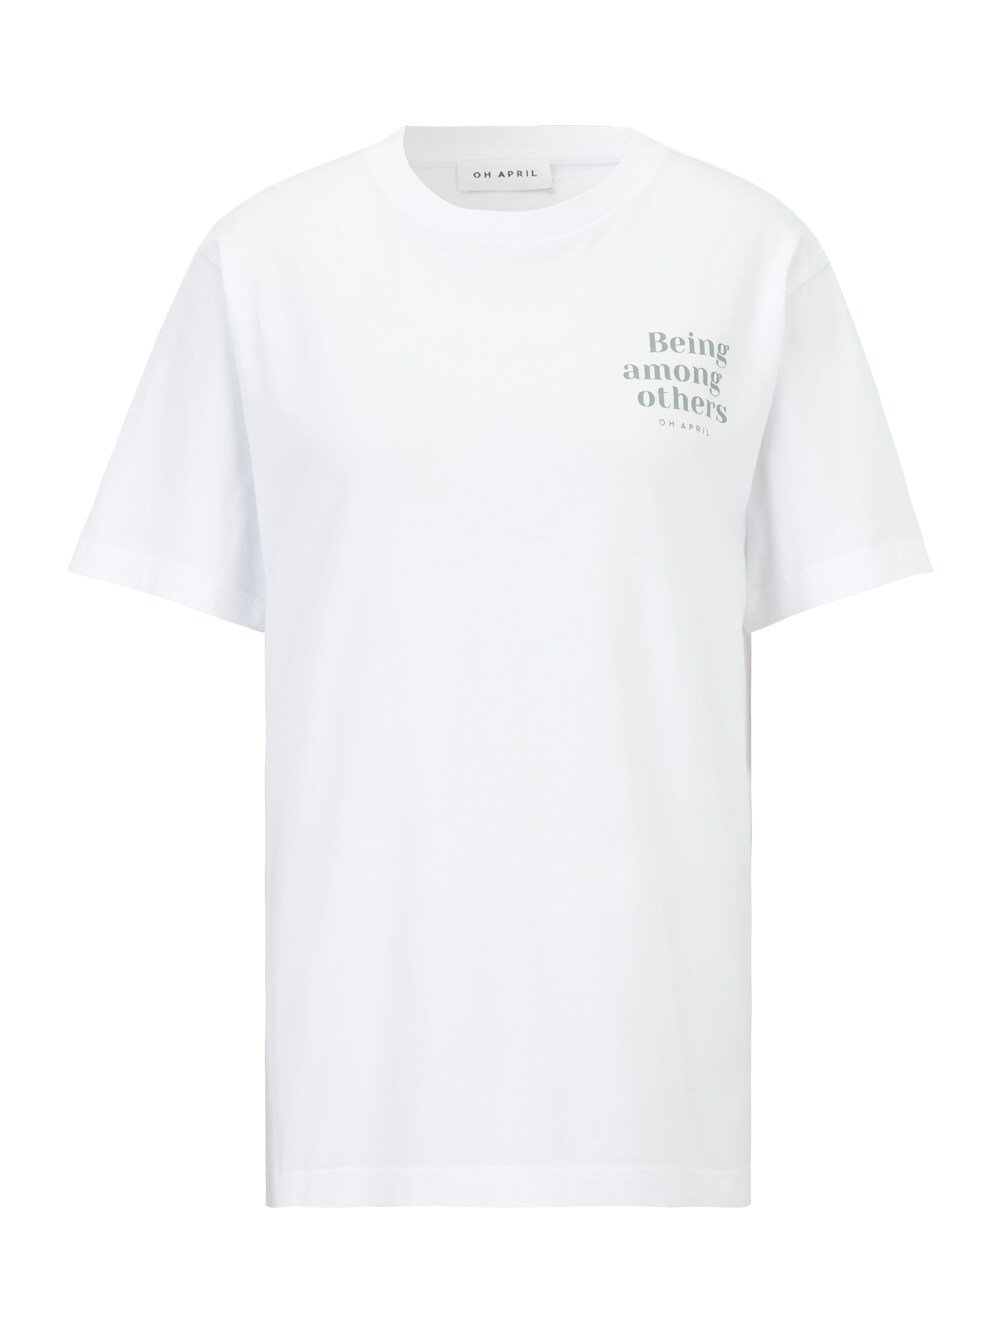 Рубашка Oh April Among Others, белый футболка поло для беременных oh ma белый